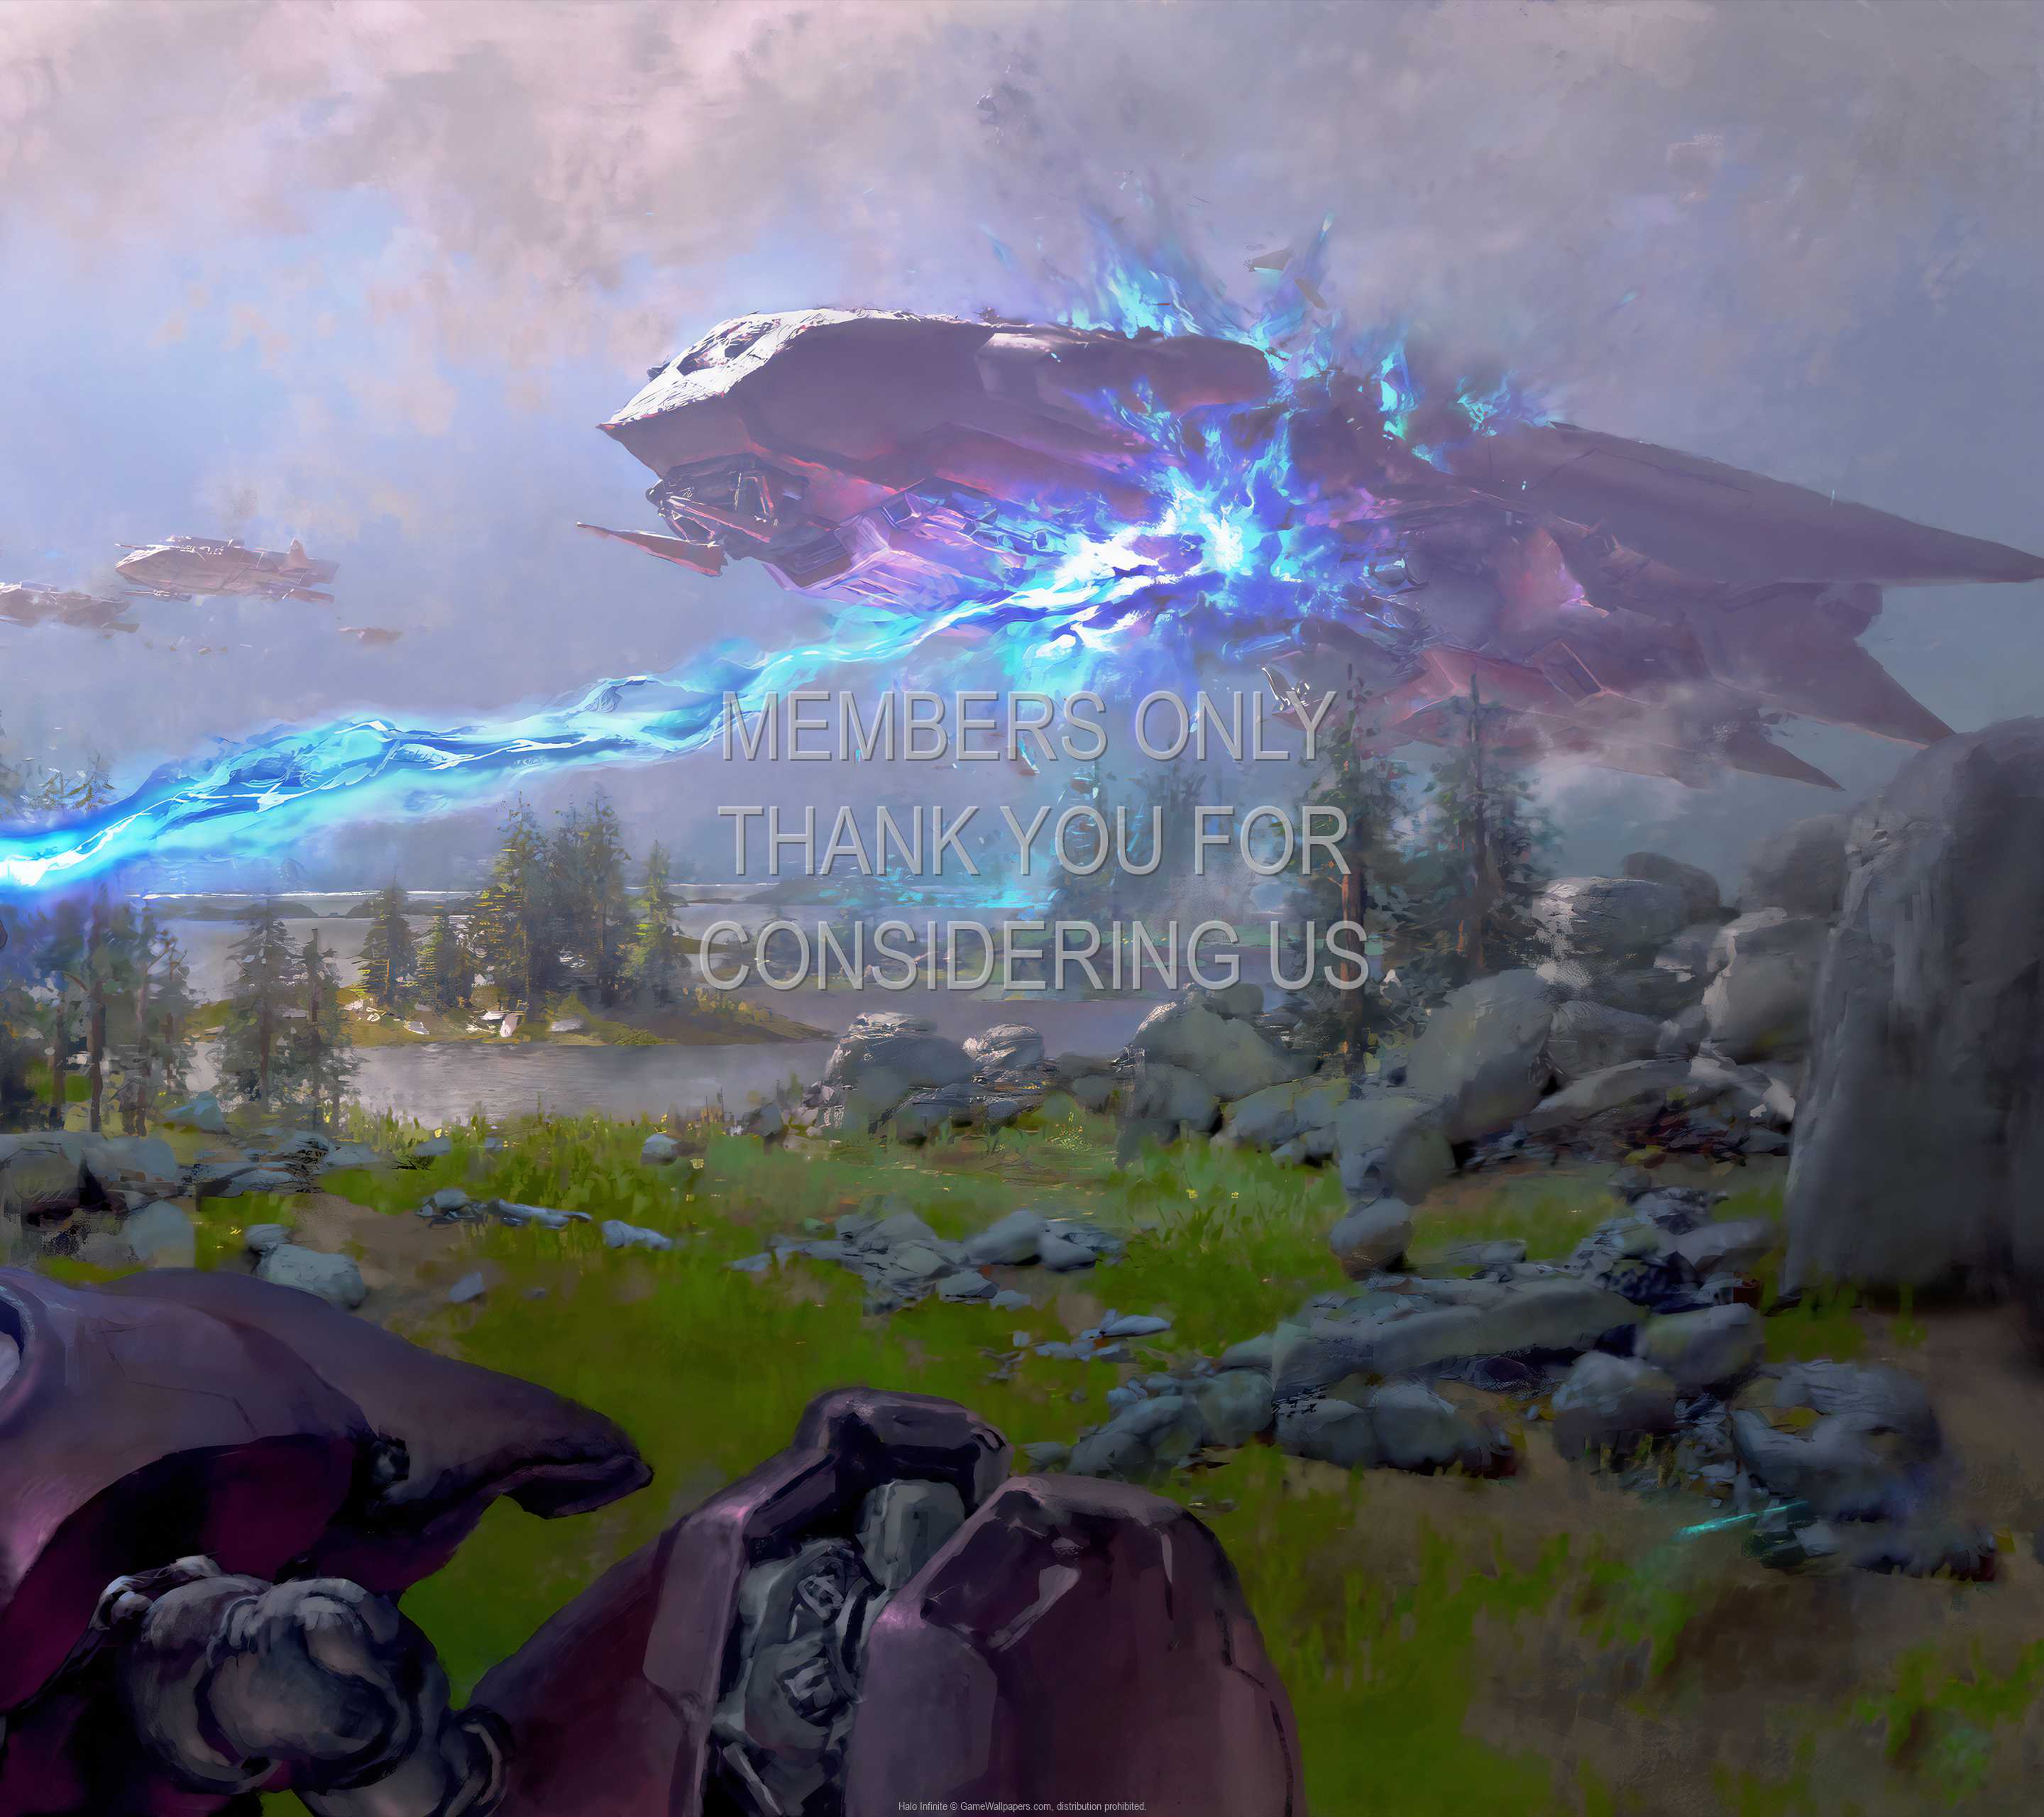 Halo: Infinite 1440p Horizontal Mobile wallpaper or background 30